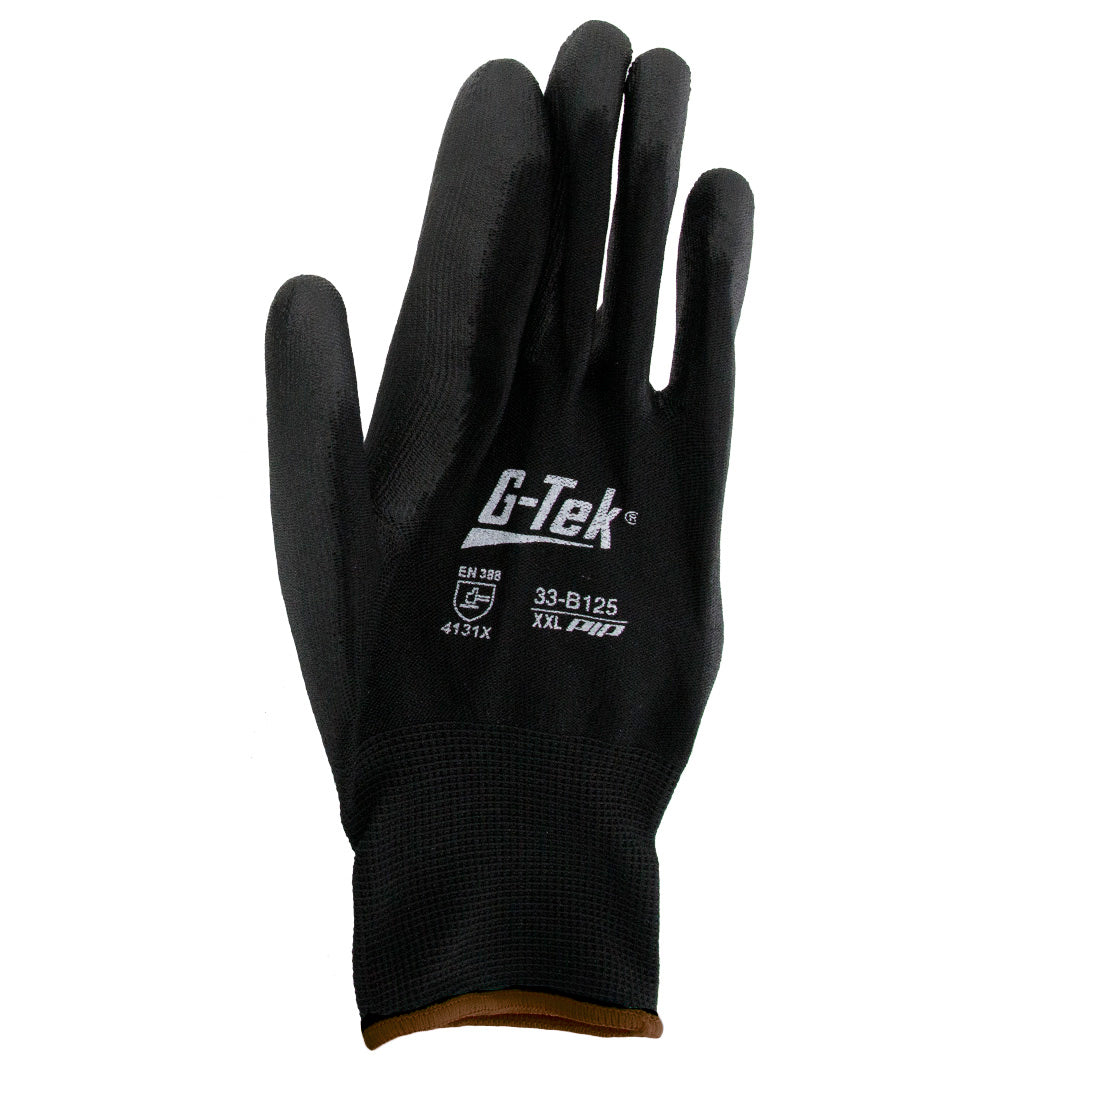 World Enterprises Poly Coated Nylon Gloves Single Large Front View